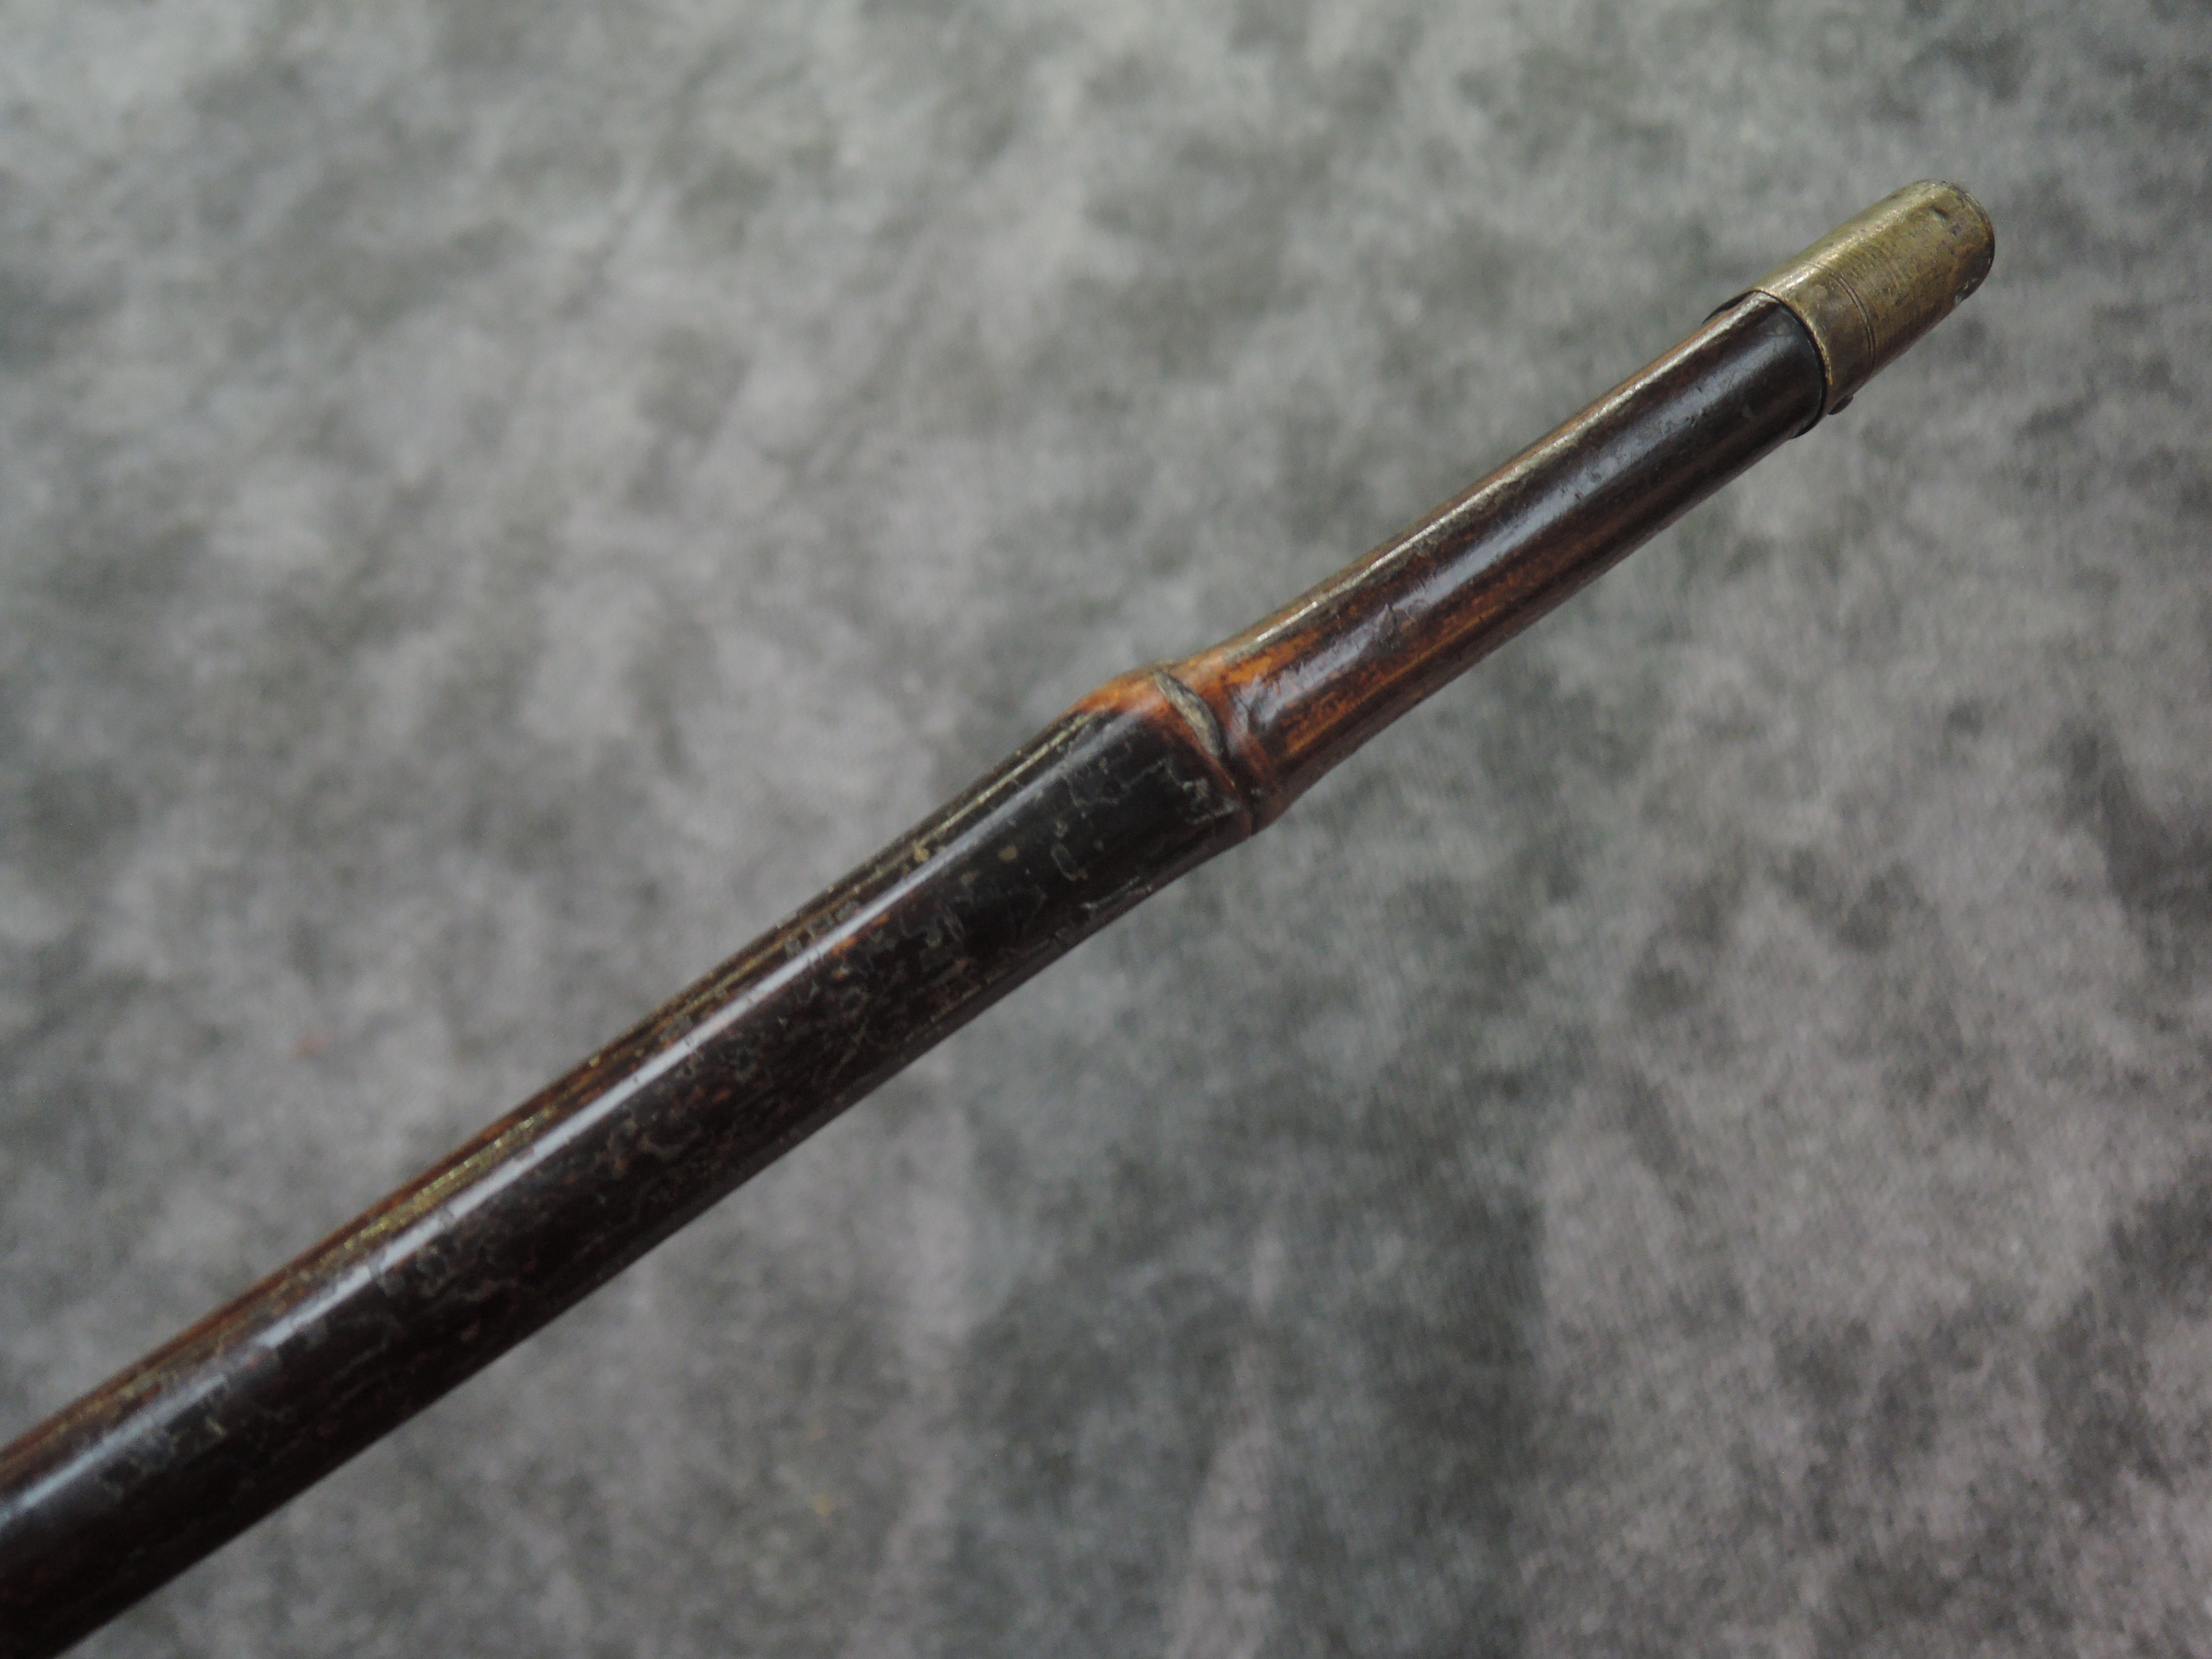 A bamboo walking cane with HM knopp ( marks worn ) holding polished ball handle Lapis Lazuli - Image 3 of 3